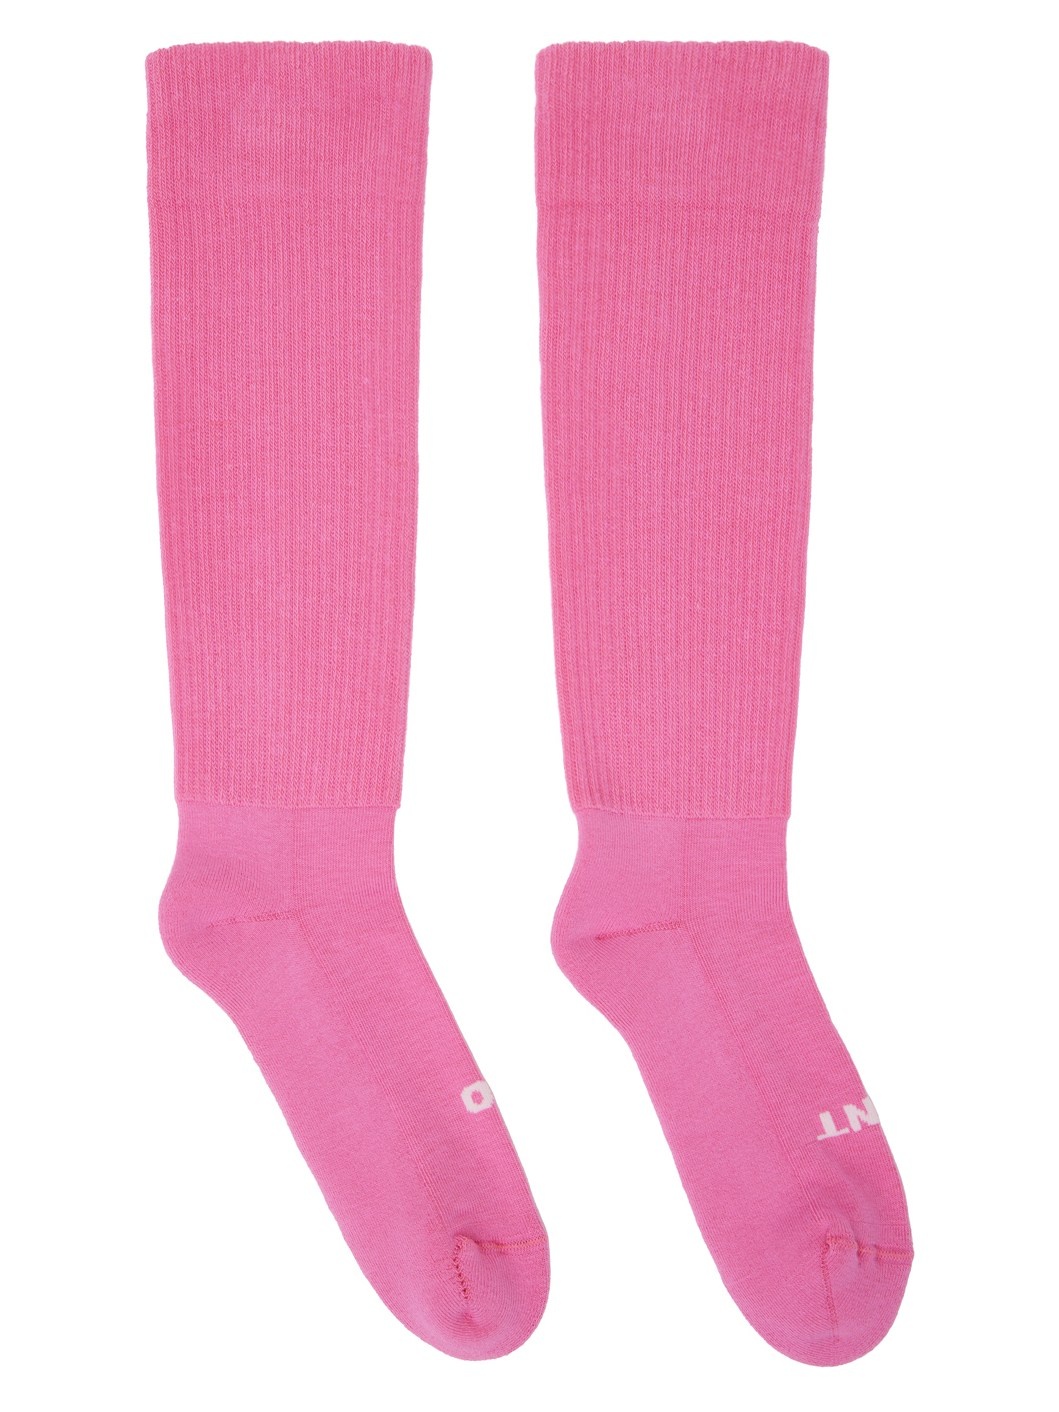 Pink Thick Socks - 1